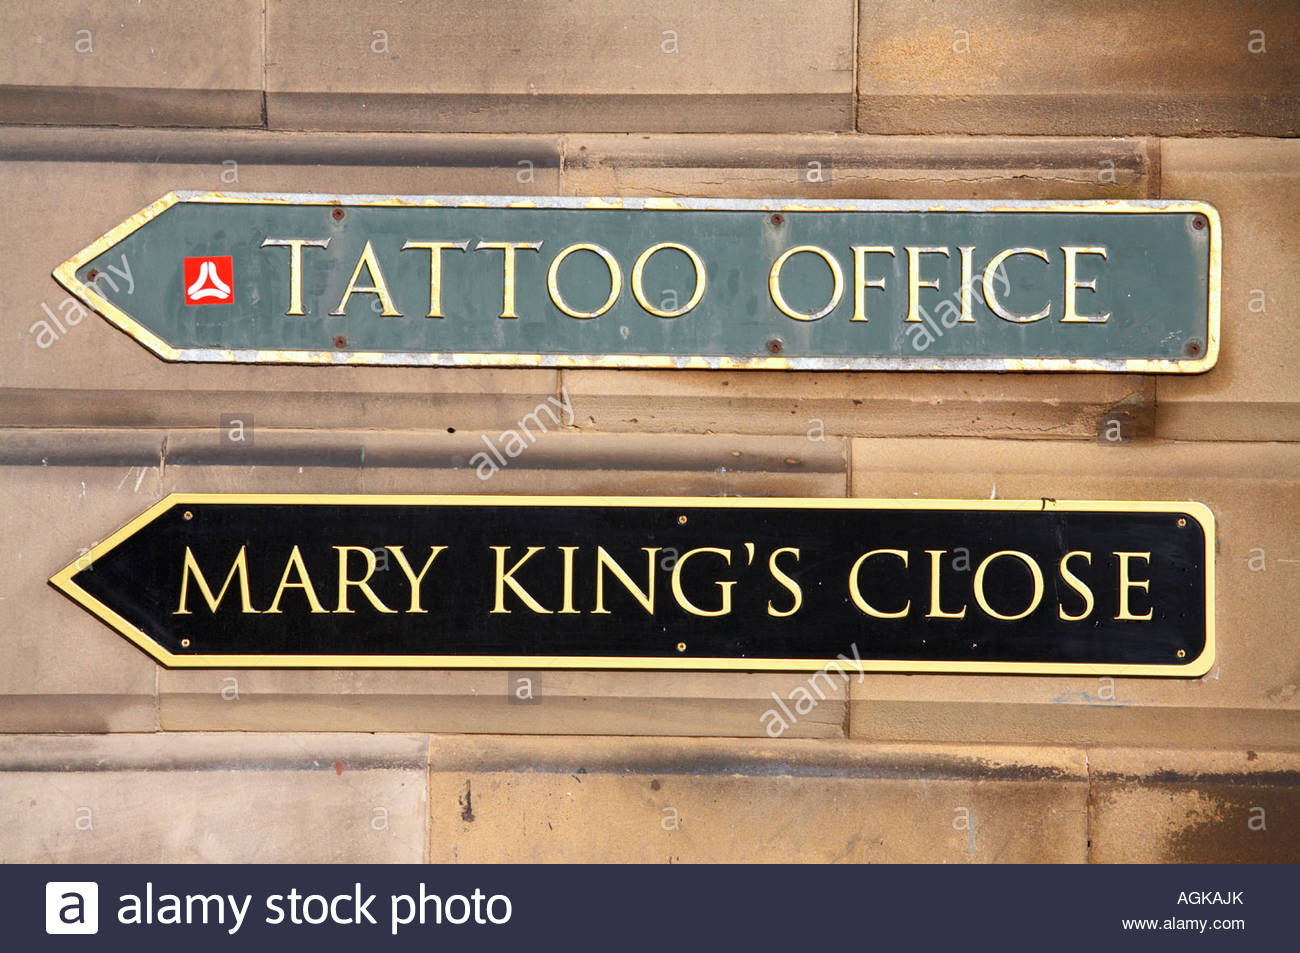 Tattoo office and Mary King's close signpost, Edinburgh SCOTLAND Stock Photo